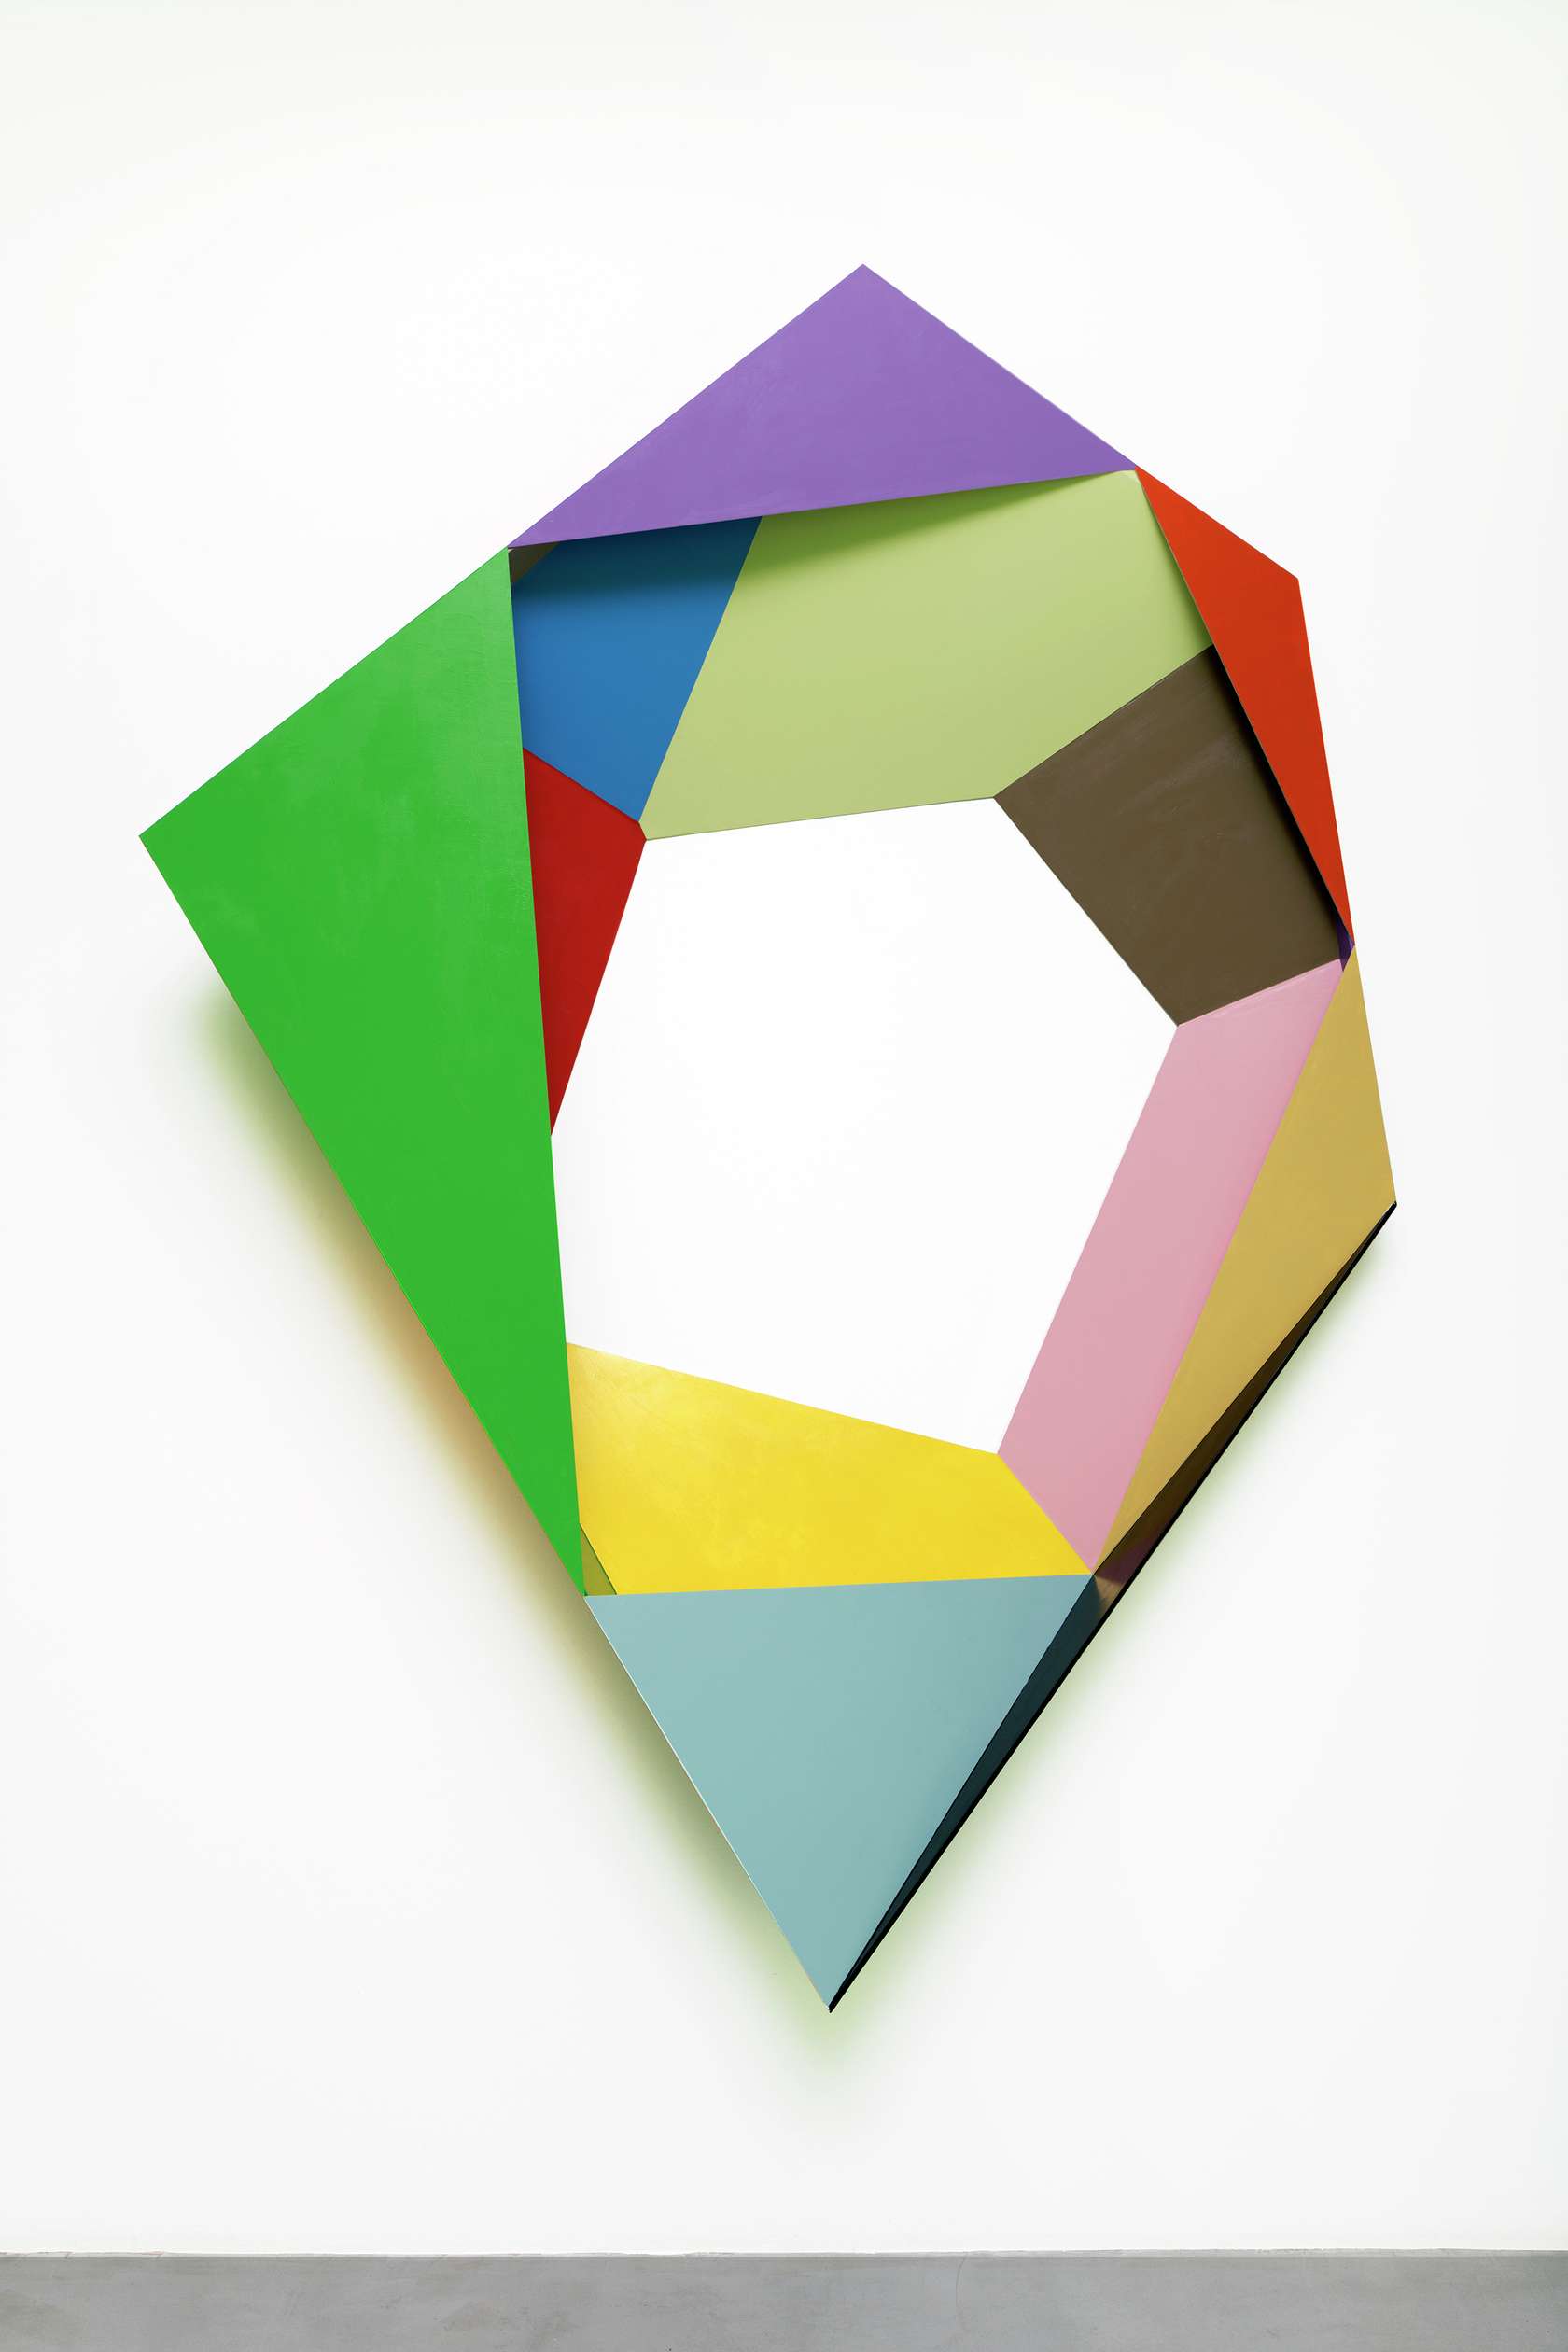 Beat Zoderer, Polygon n°1, 2018 Acrylique sur contreplaqué202 × 150 × 25.5 cm / 79 1/2 × 59  × 10  in.